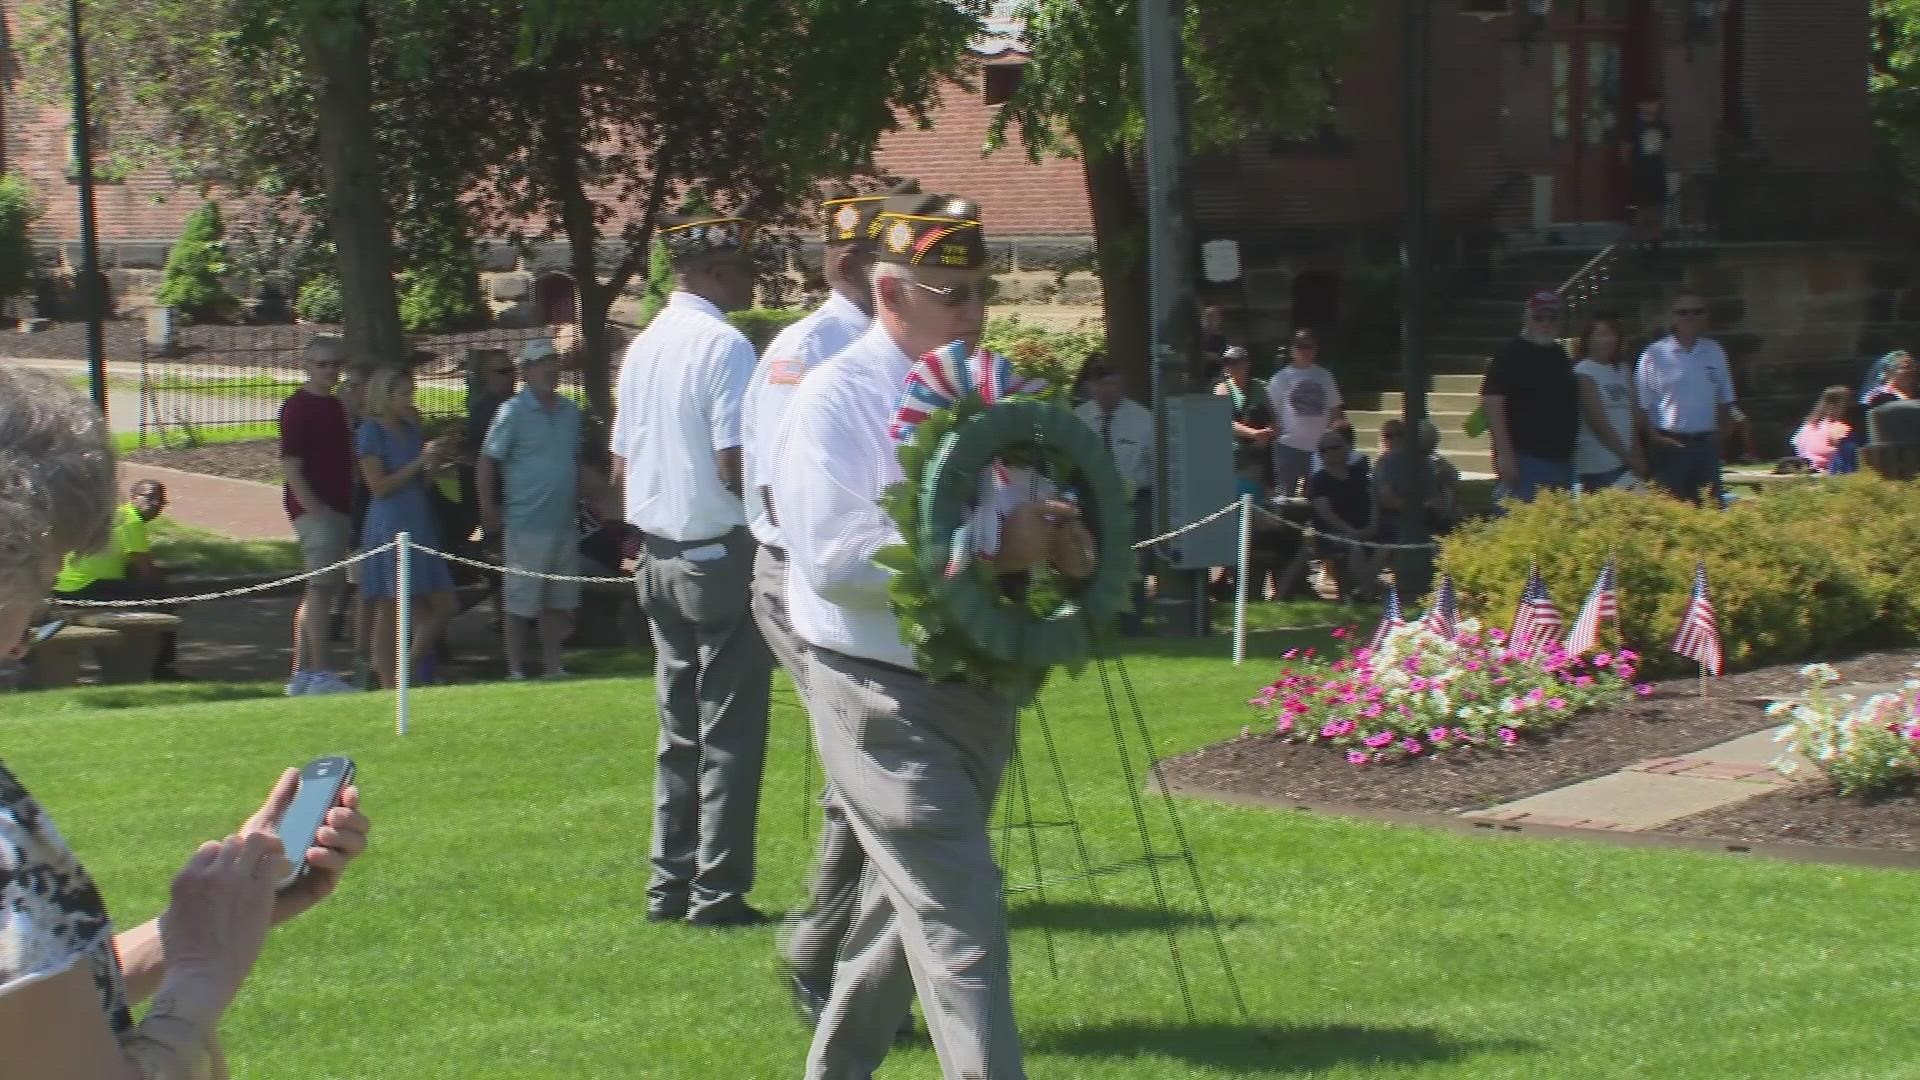 Communities across Northeast Ohio held ceremonies honoring veterans on this Memorial Day.